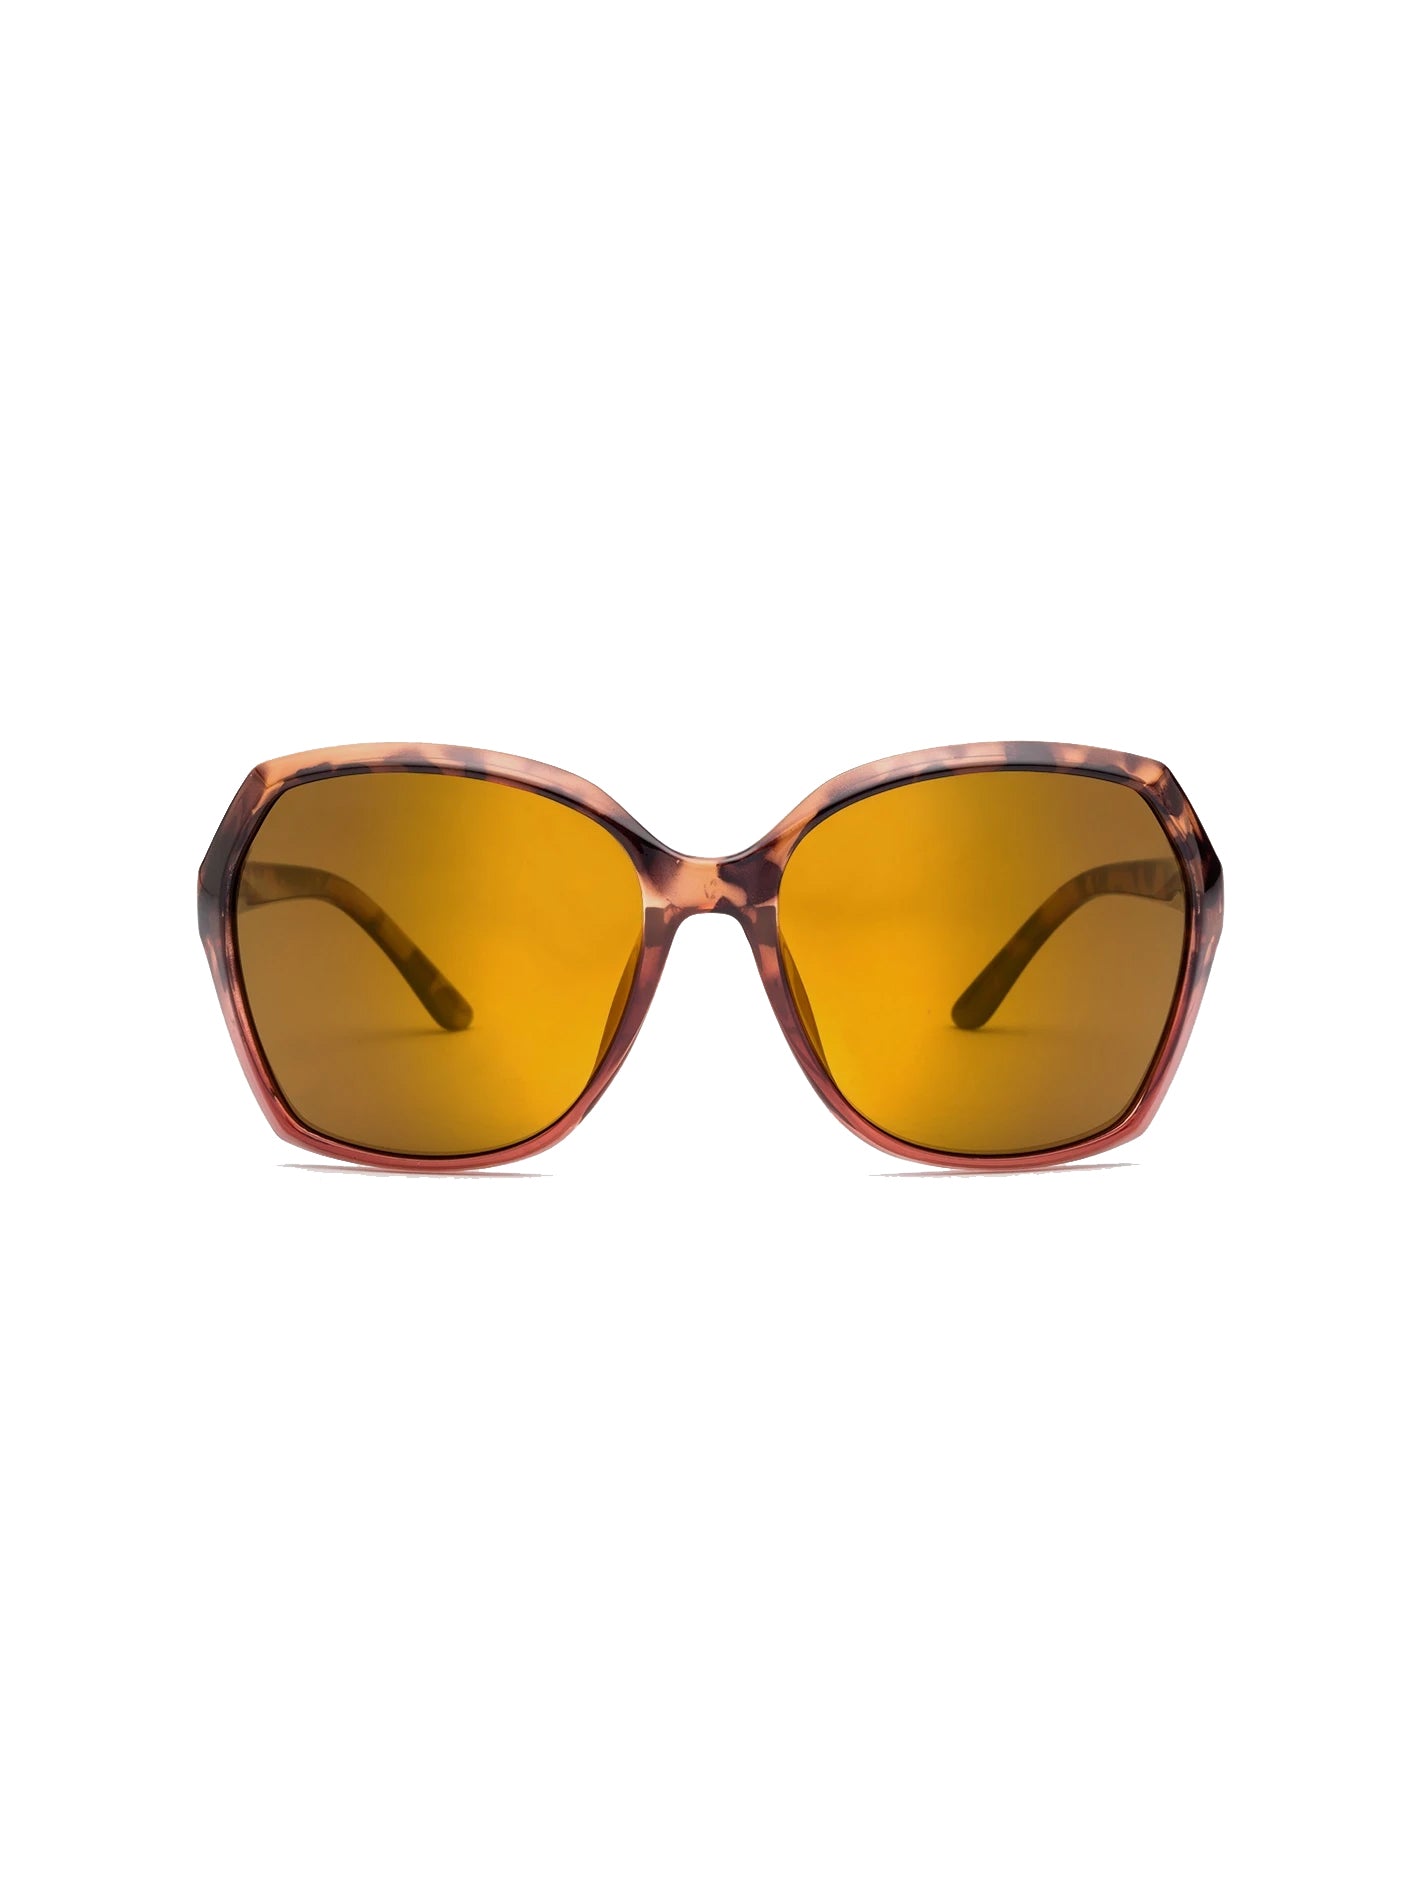 Volcom Psychic Polarized Sunglasses GlossTort GoldMirrorPolar Oversized